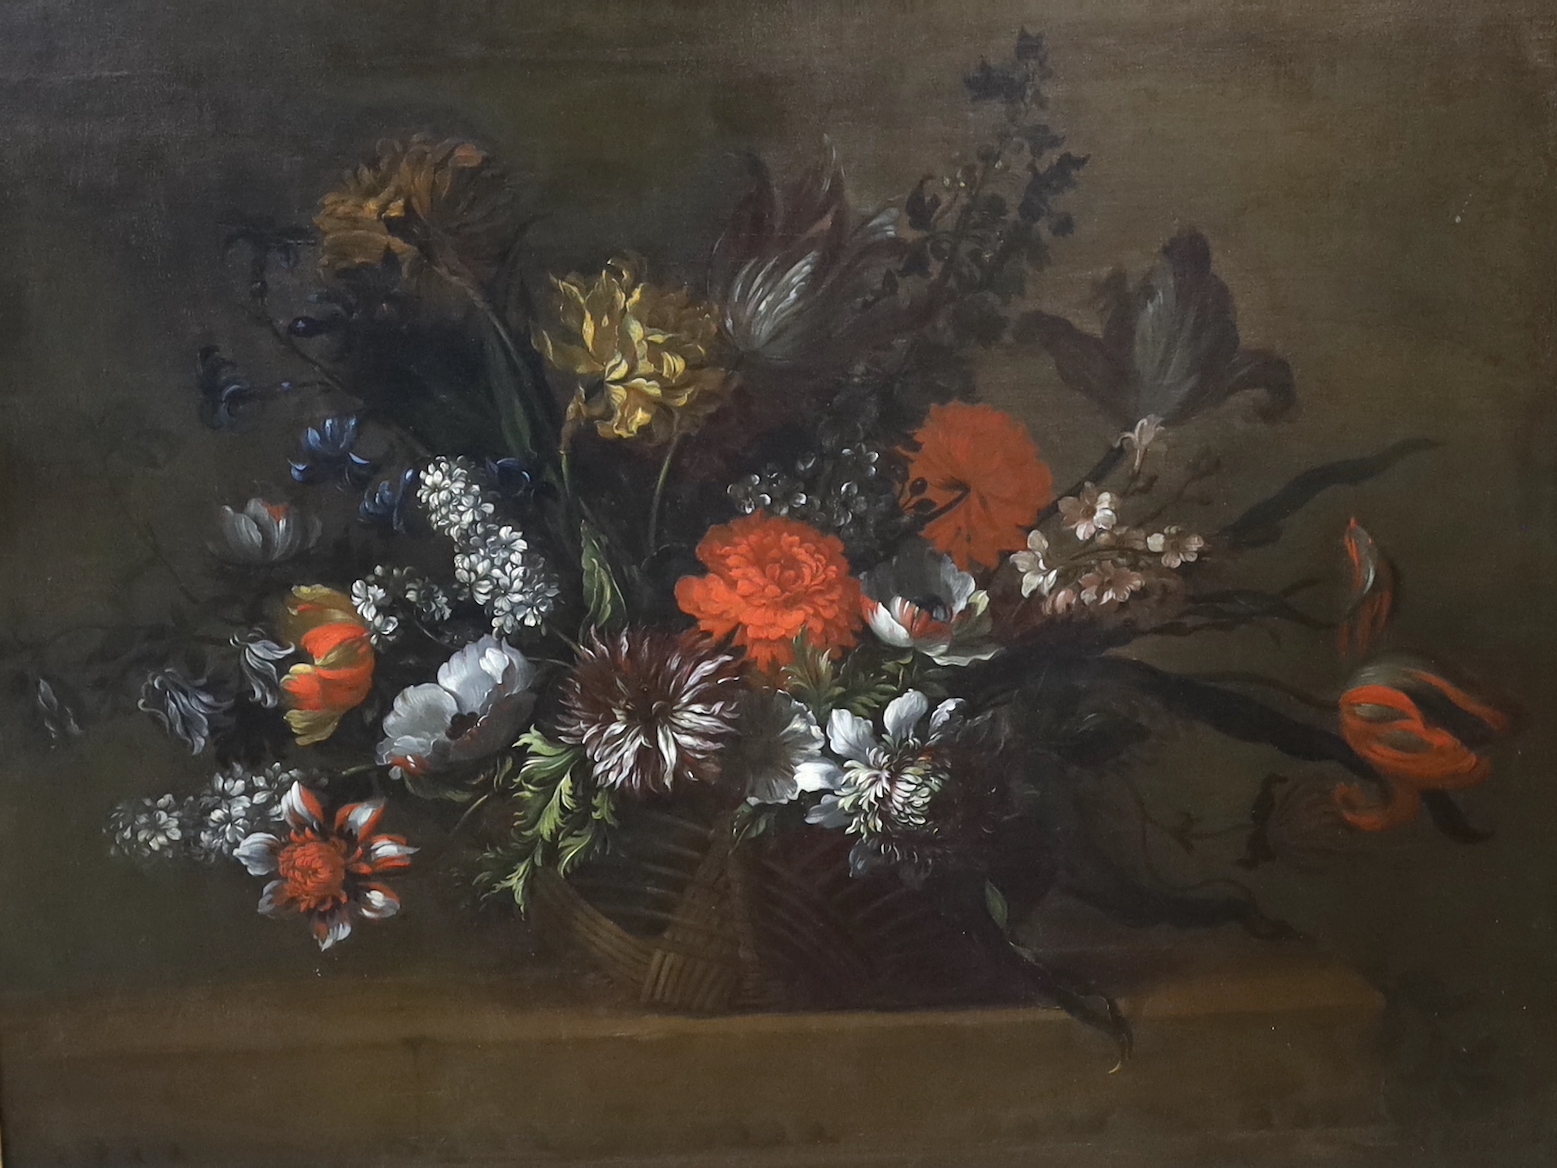 19th century English / Dutch school, oil on canvas, Still life of flowers in a basket, 57 x 70cm, ornate gilt frame